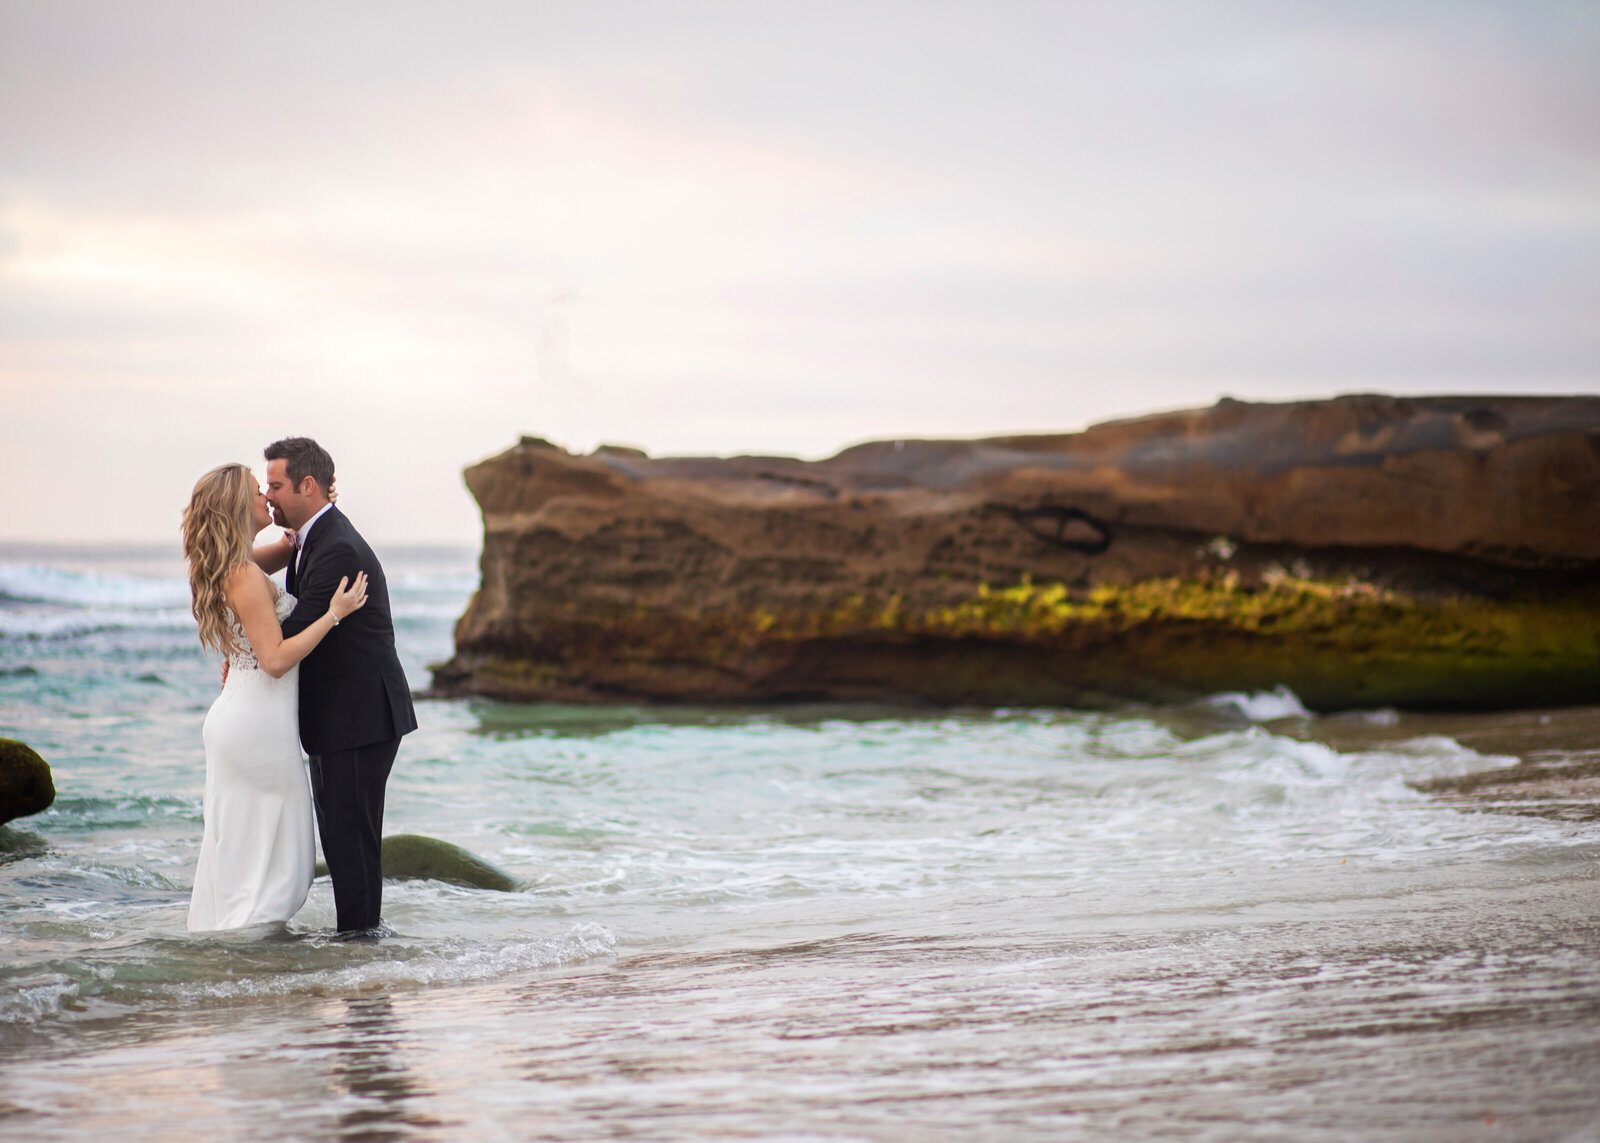 Adventurous destination wedding couple standing in the ocean in their wedding attire at La Jolla Beach, California for destination elopement.